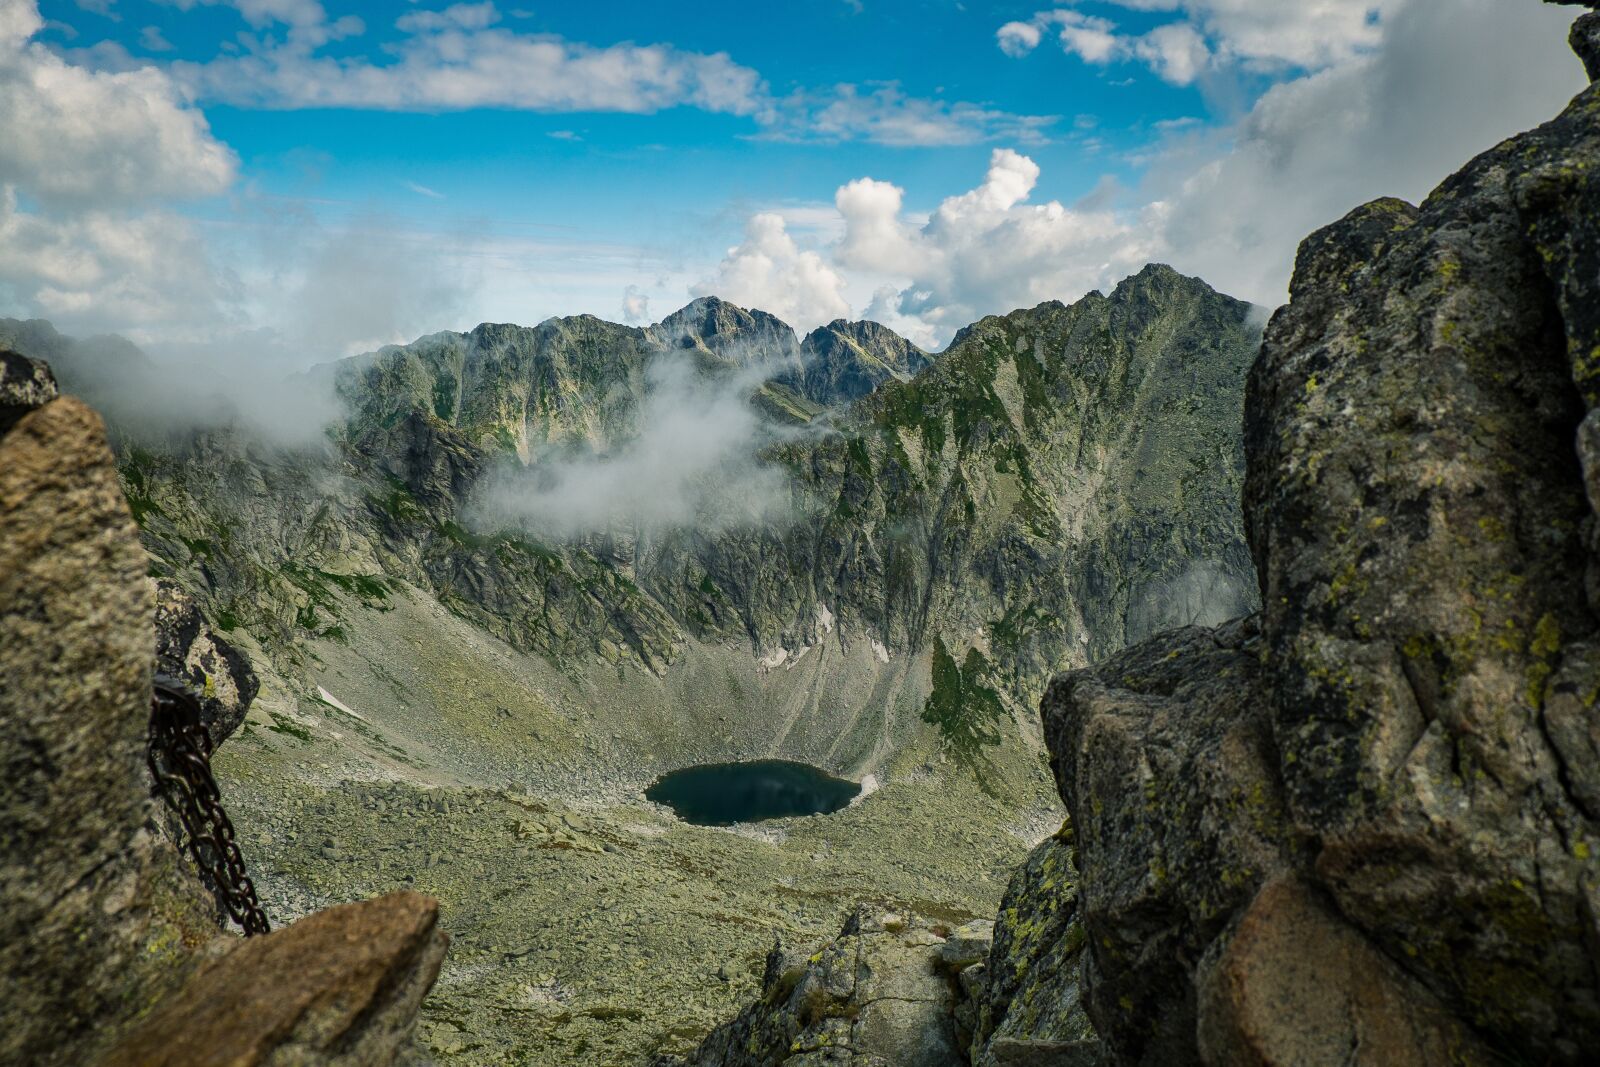 Fujifilm X-T10 sample photo. Tatra mountains, mountains, landscape photography